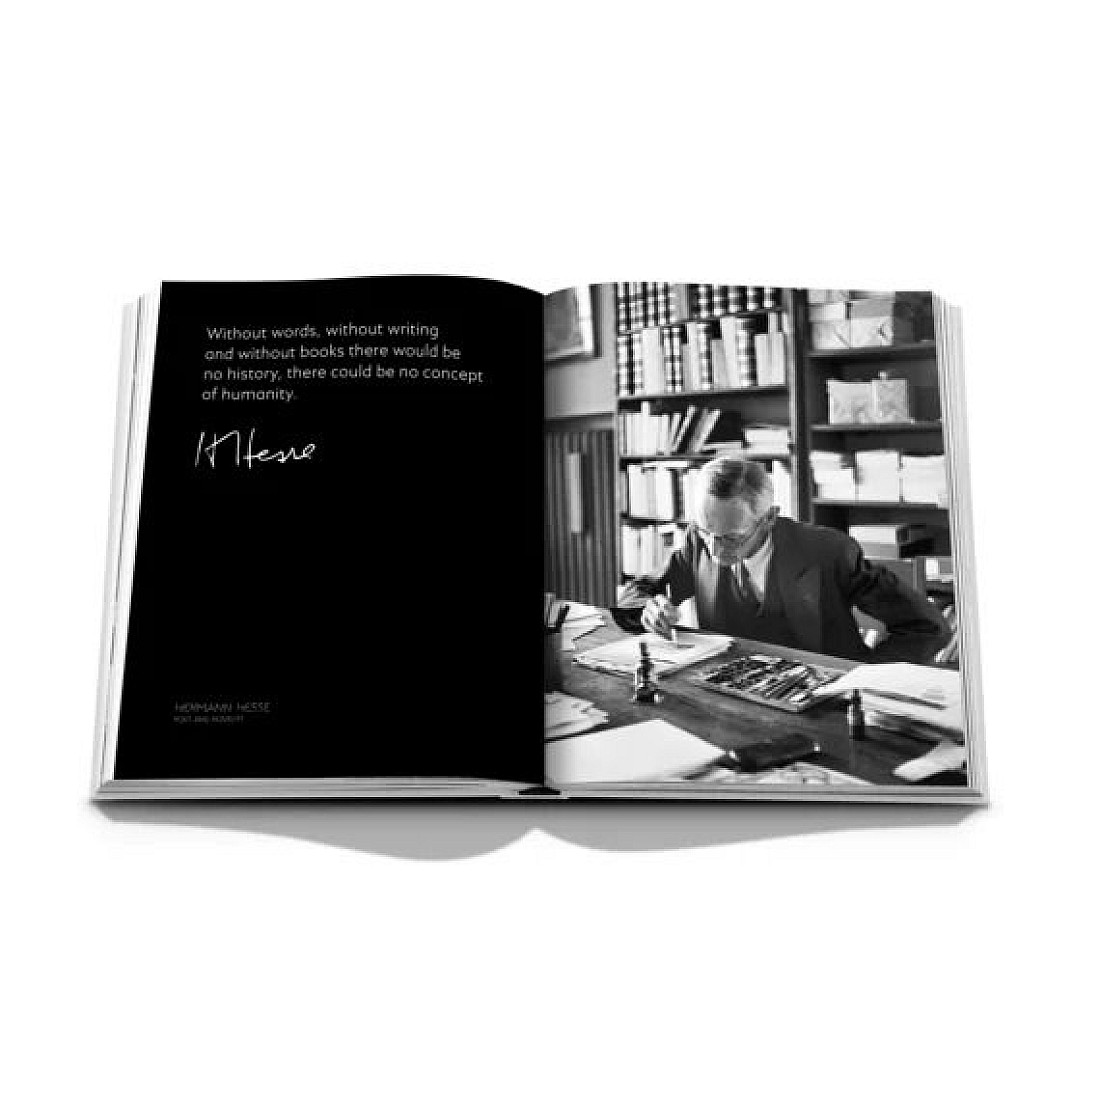 Graden Celsius logboek Monumentaal Montblanc Inspire Writing Coffee Table Book - 2021 - Boek / Book |  Appelboom.com